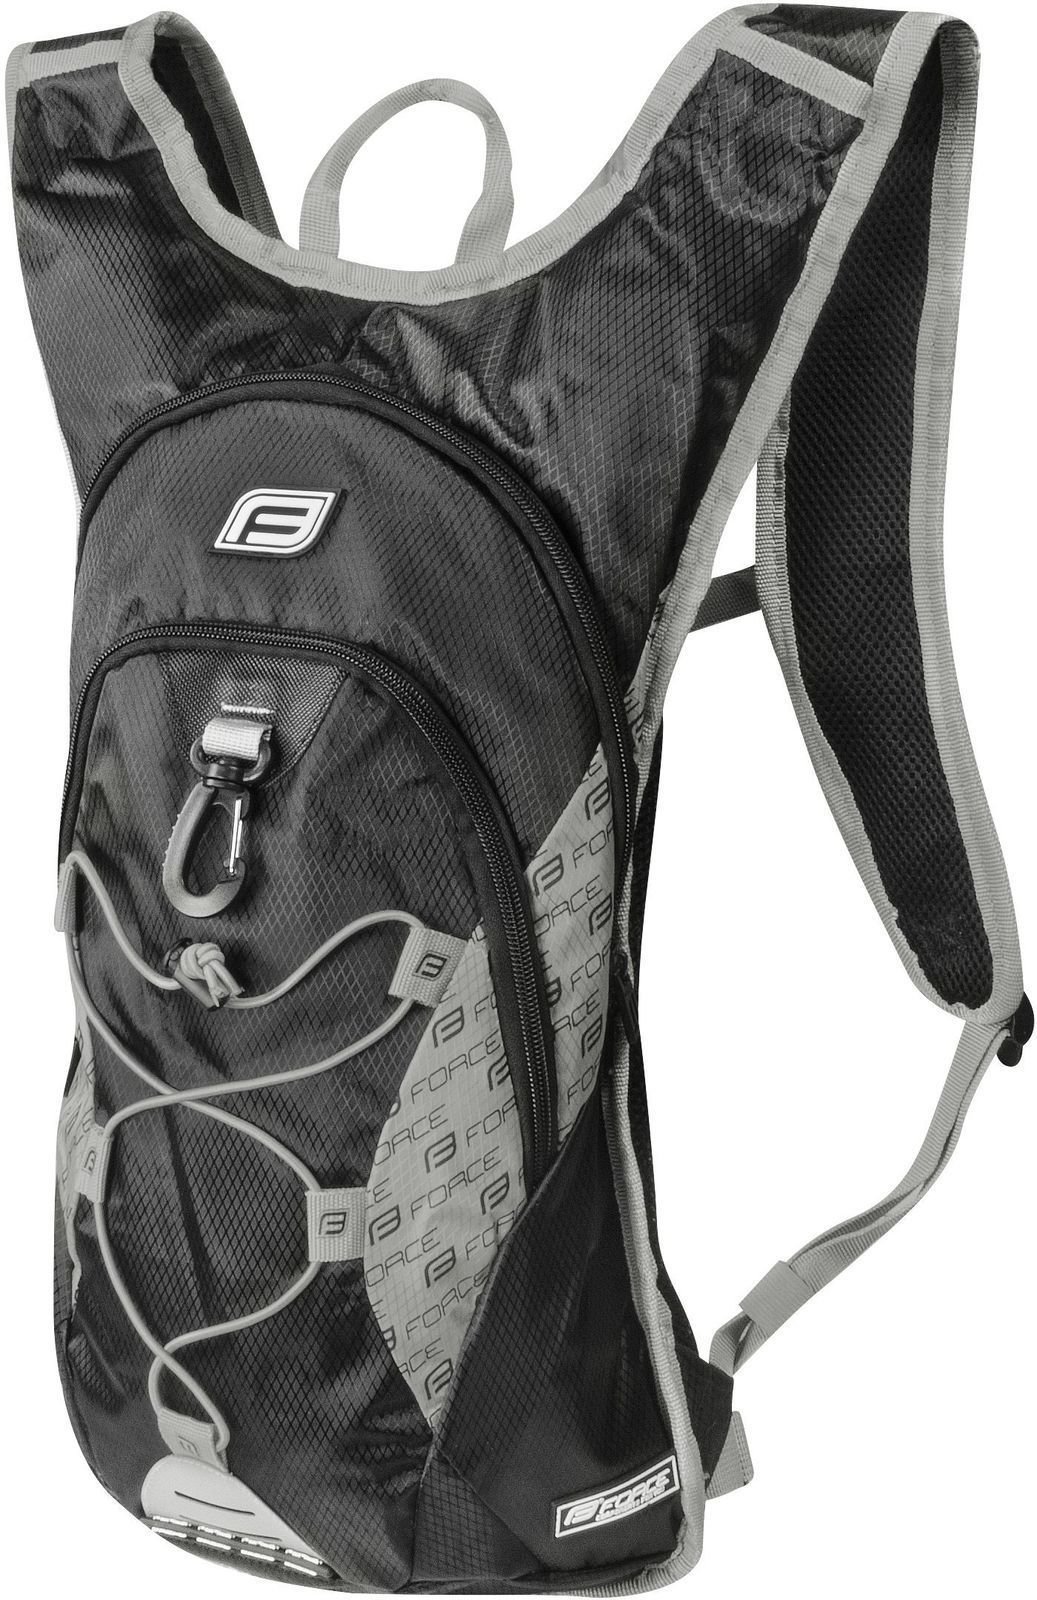 Ulkoilureppu Force Berry Backpack 12 Musta-Grey Ulkoilureppu